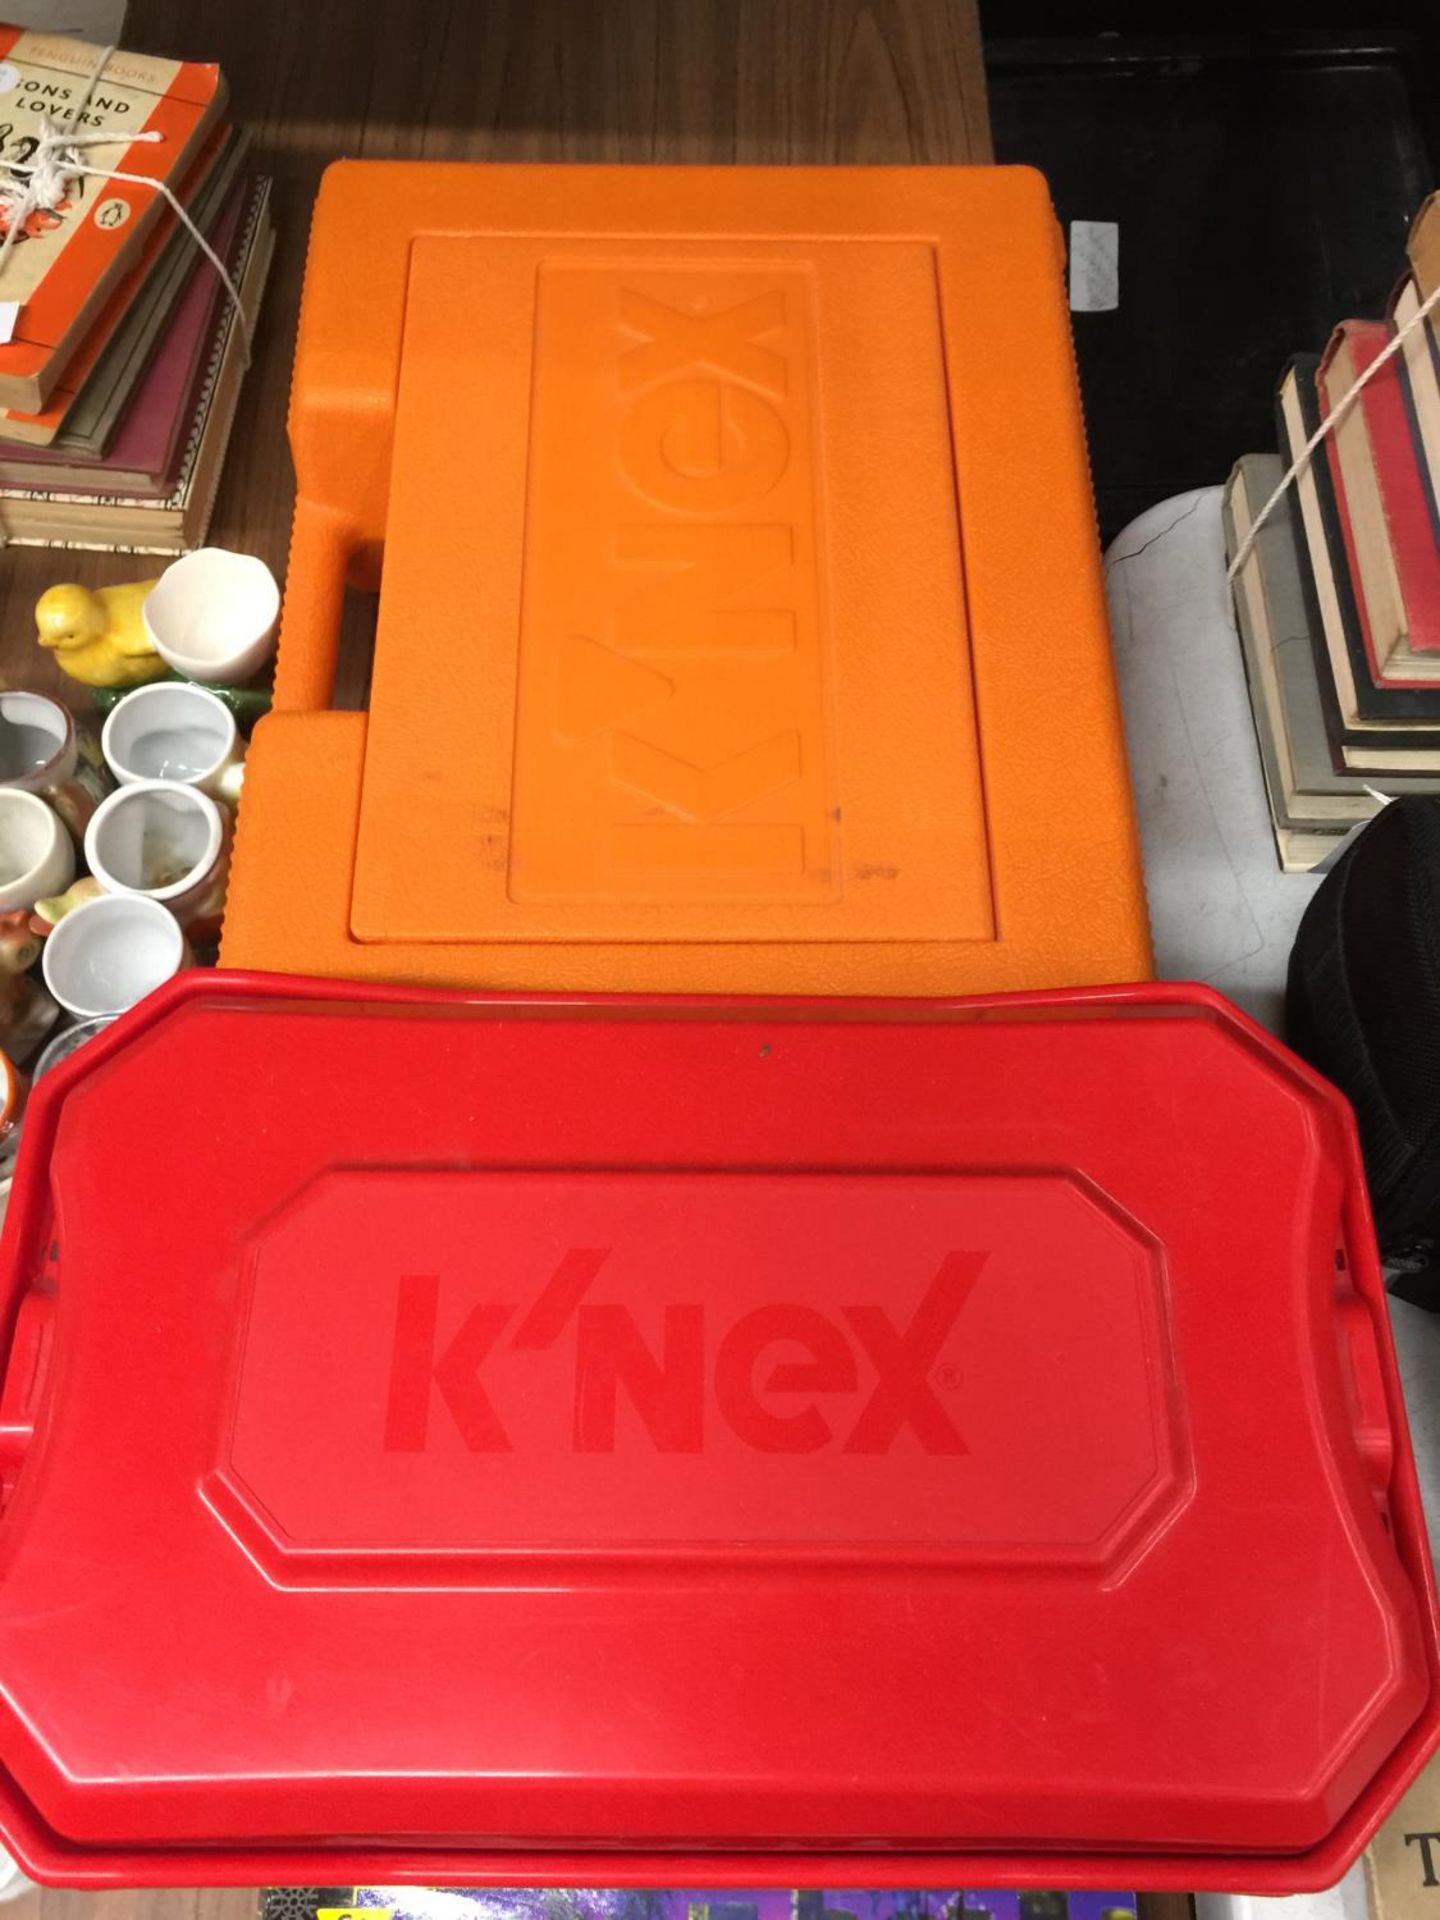 THREE BOXES OF K'NEX BUILDING BRICKS - Image 3 of 3